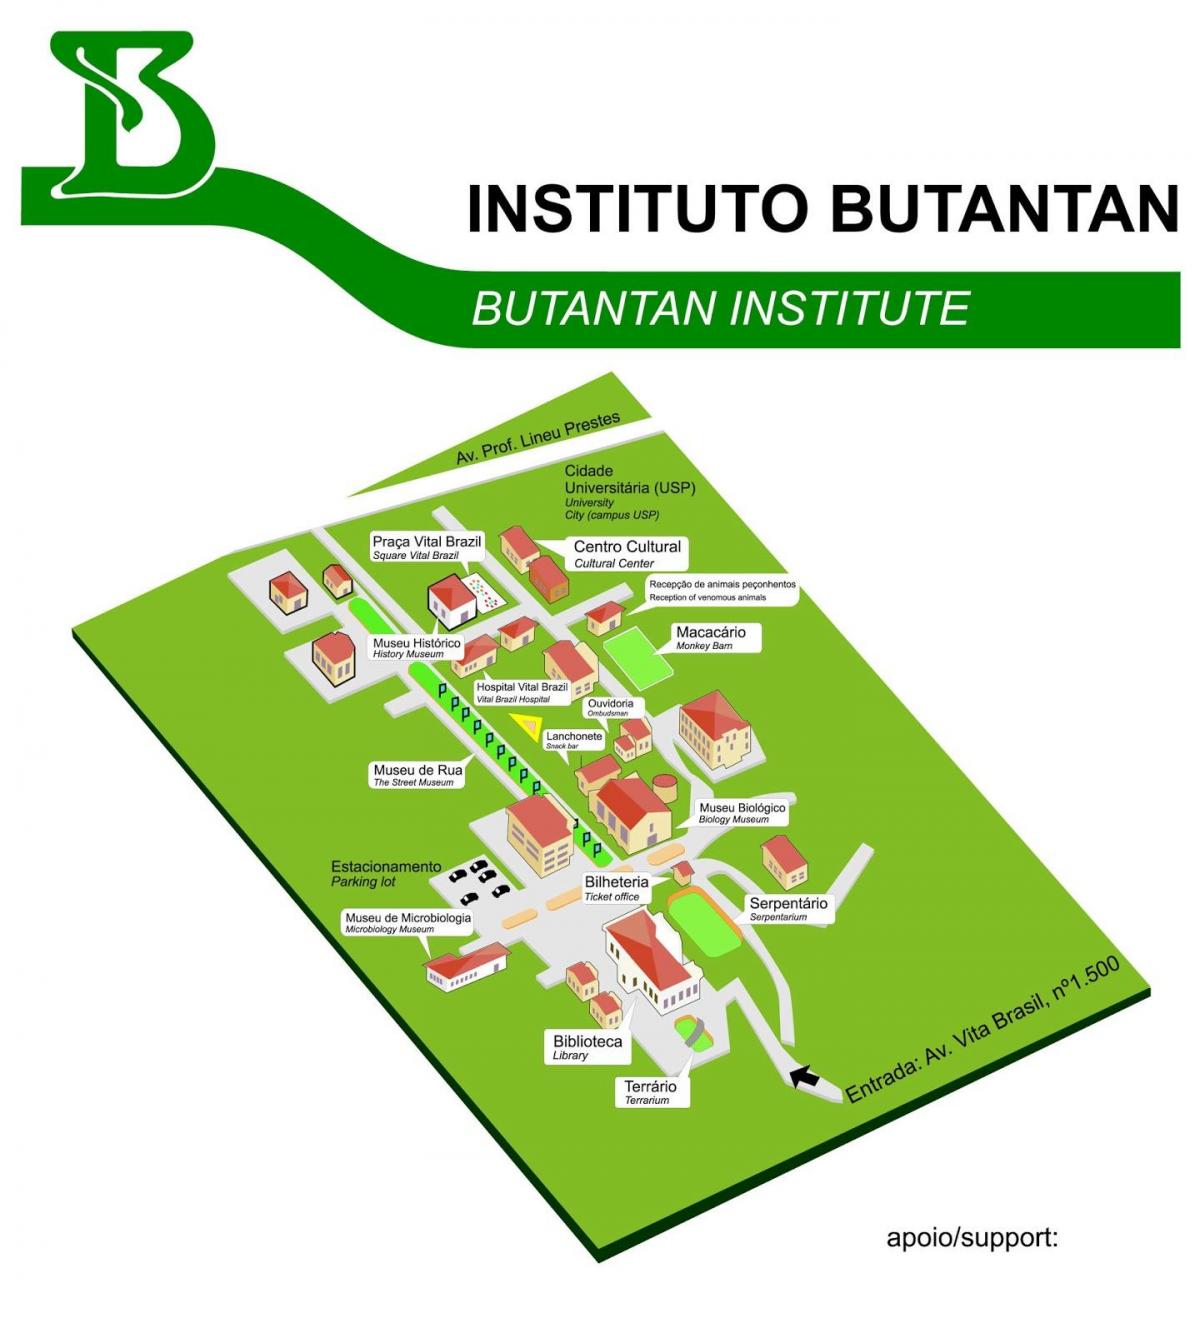 Kart over institute Butantan